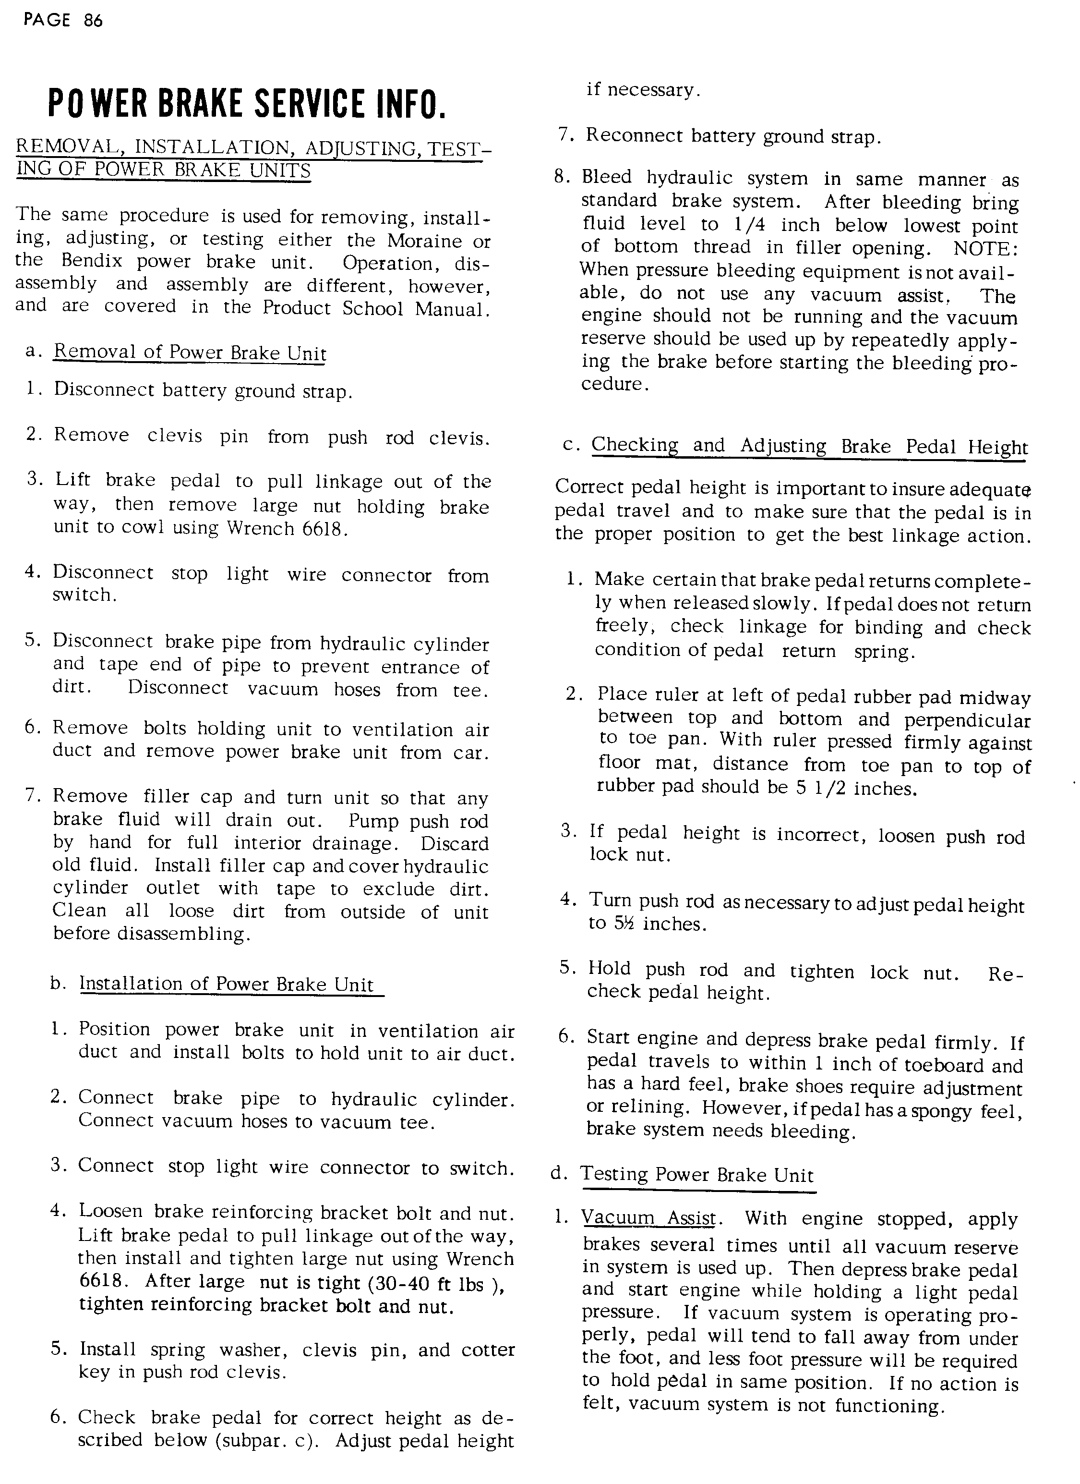 n_1957 Buick Product Service  Bulletins-090-090.jpg